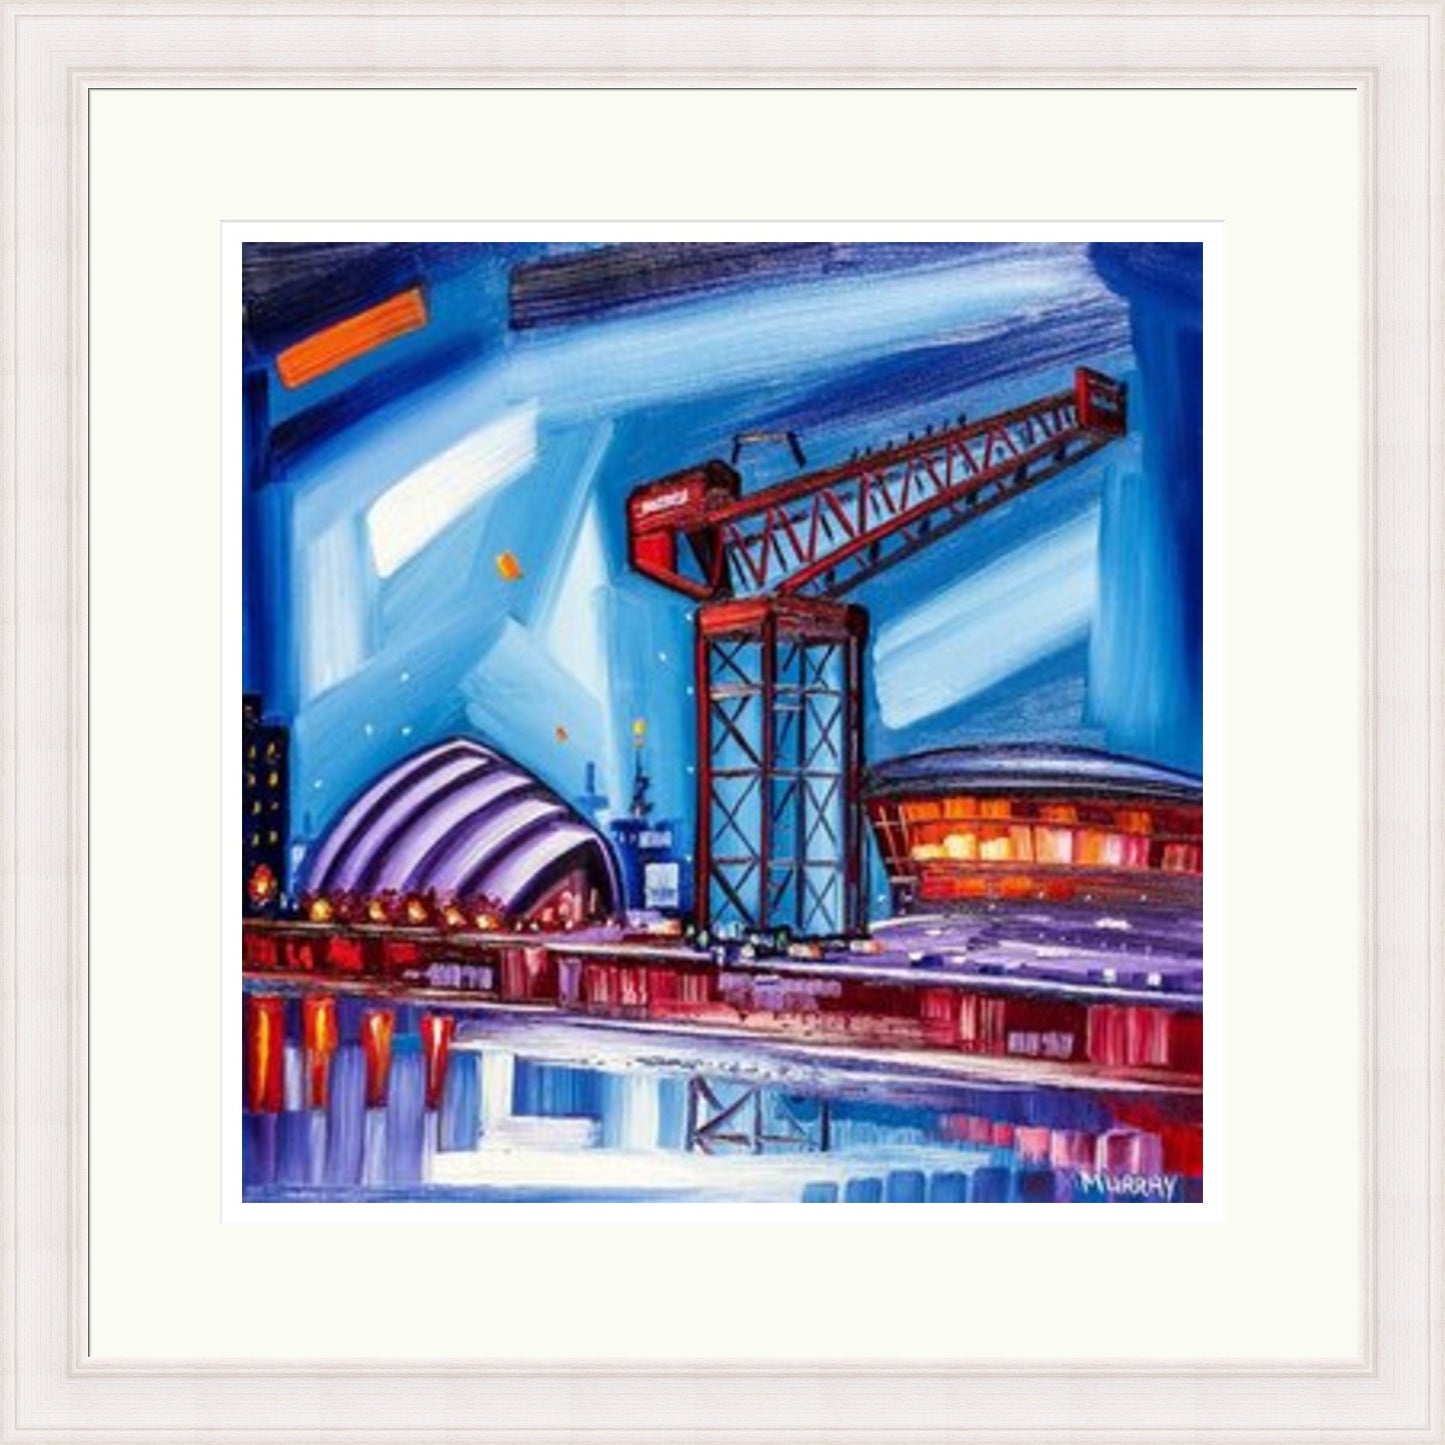 Glasgow Clydeside, Finnieston Crane by Raymond Murray